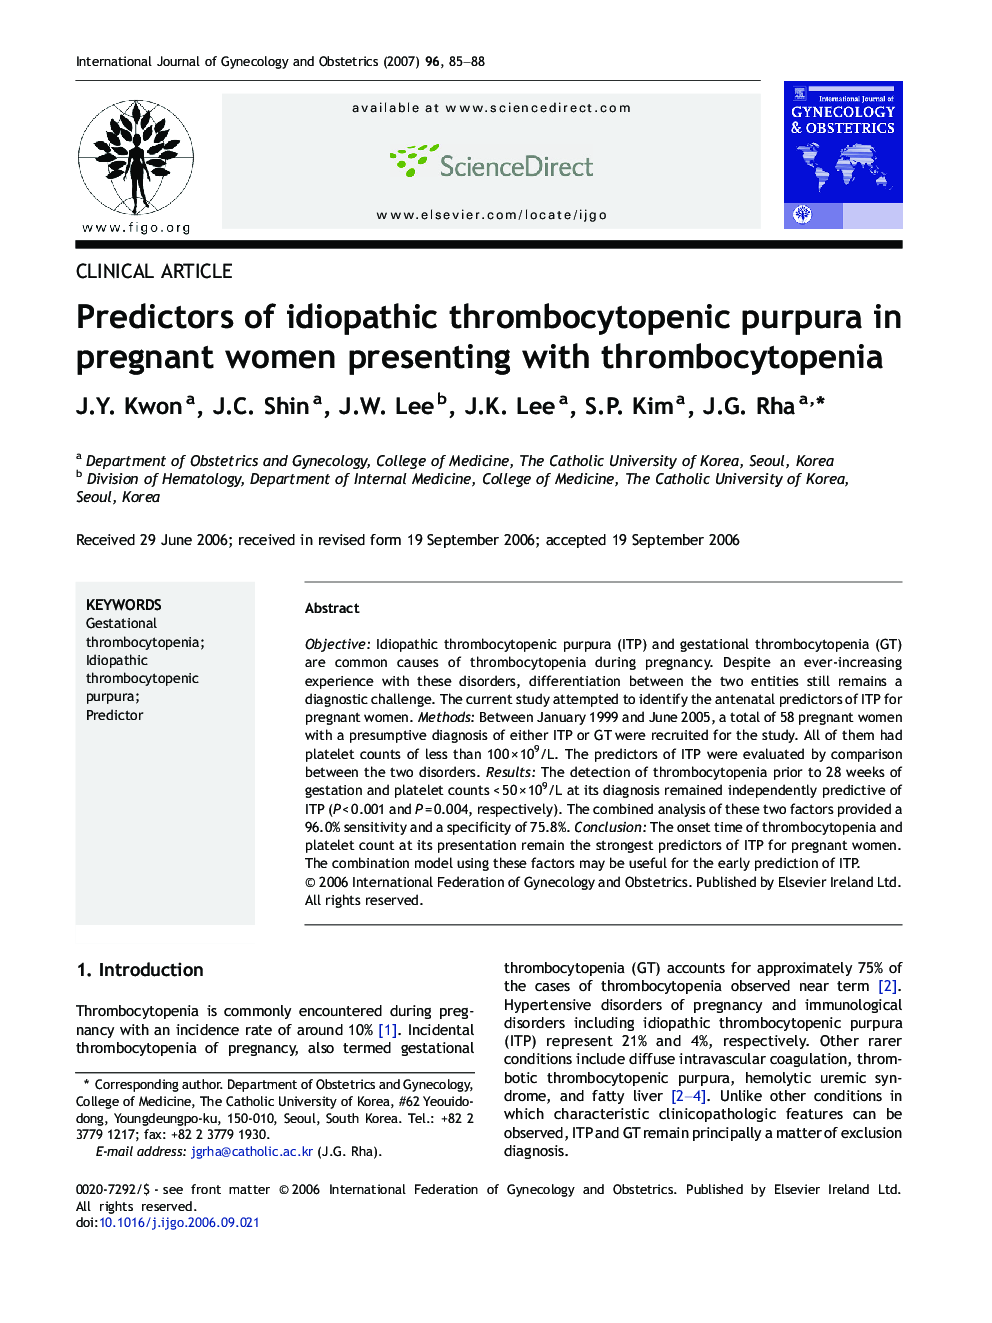 Predictors of idiopathic thrombocytopenic purpura in pregnant women presenting with thrombocytopenia